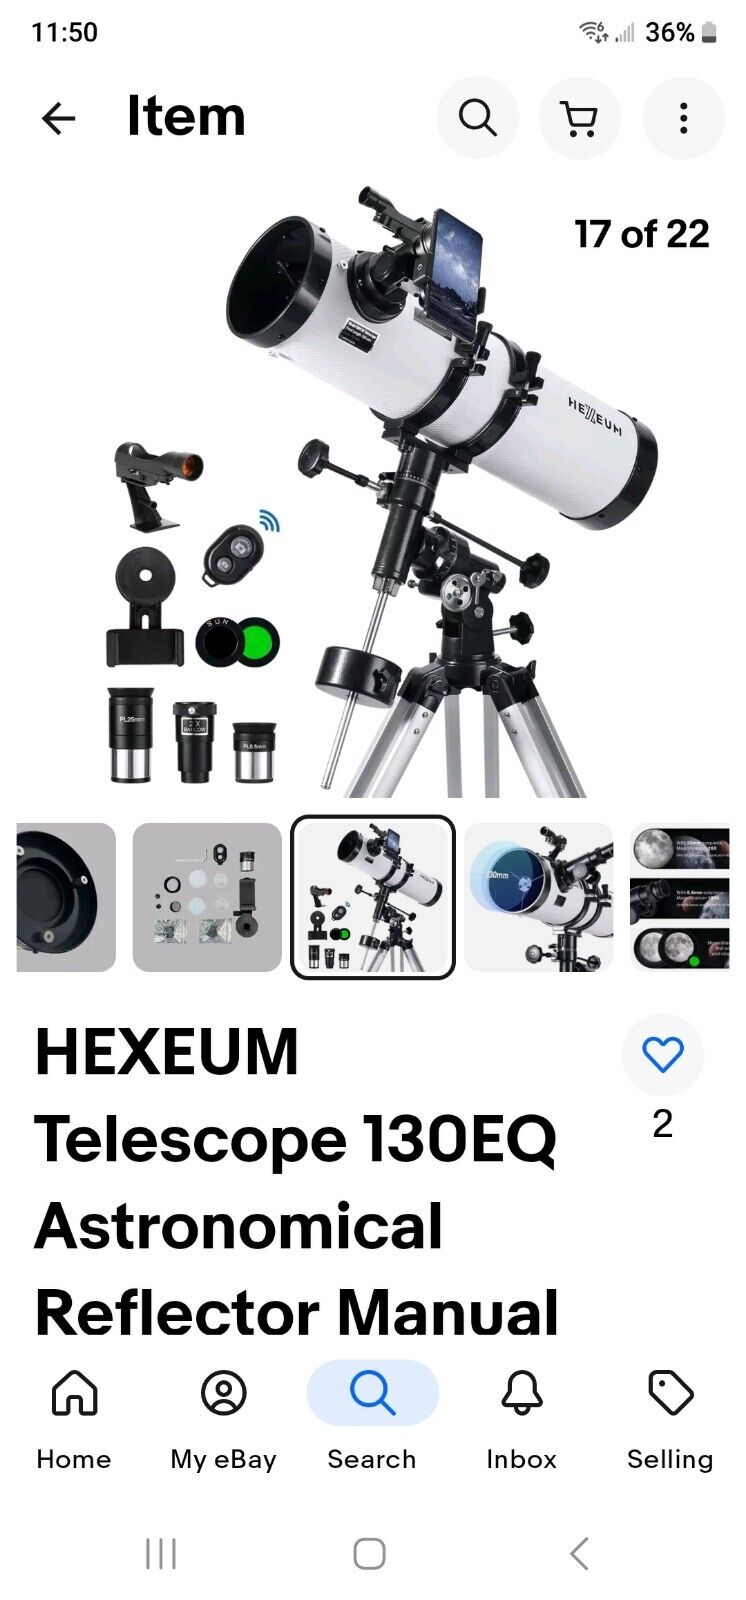 HEXEUM Telescope 130EQ Astronomical Reflector Manual Equatorial telescope